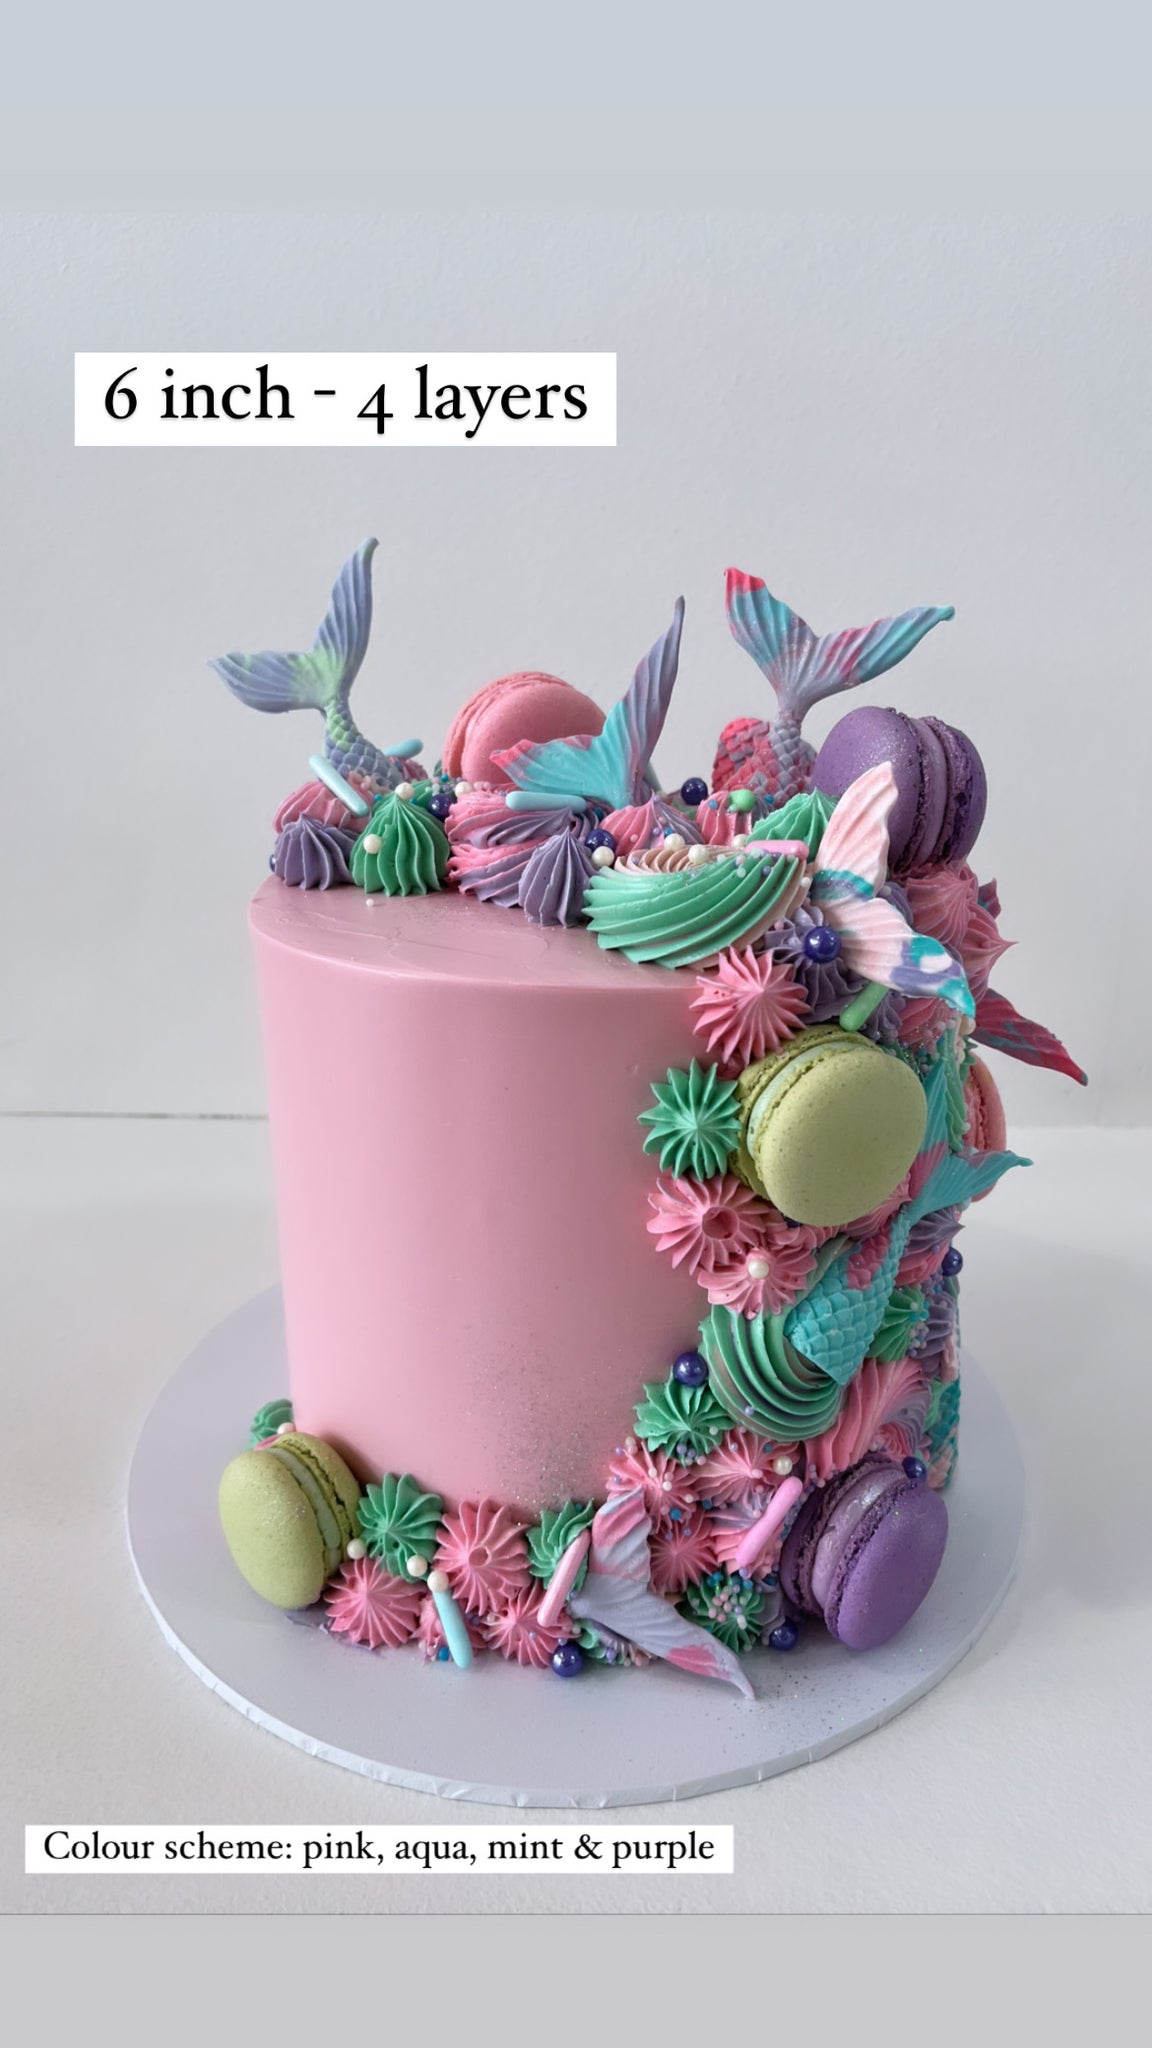 Unicorns & Mermaid Cakes